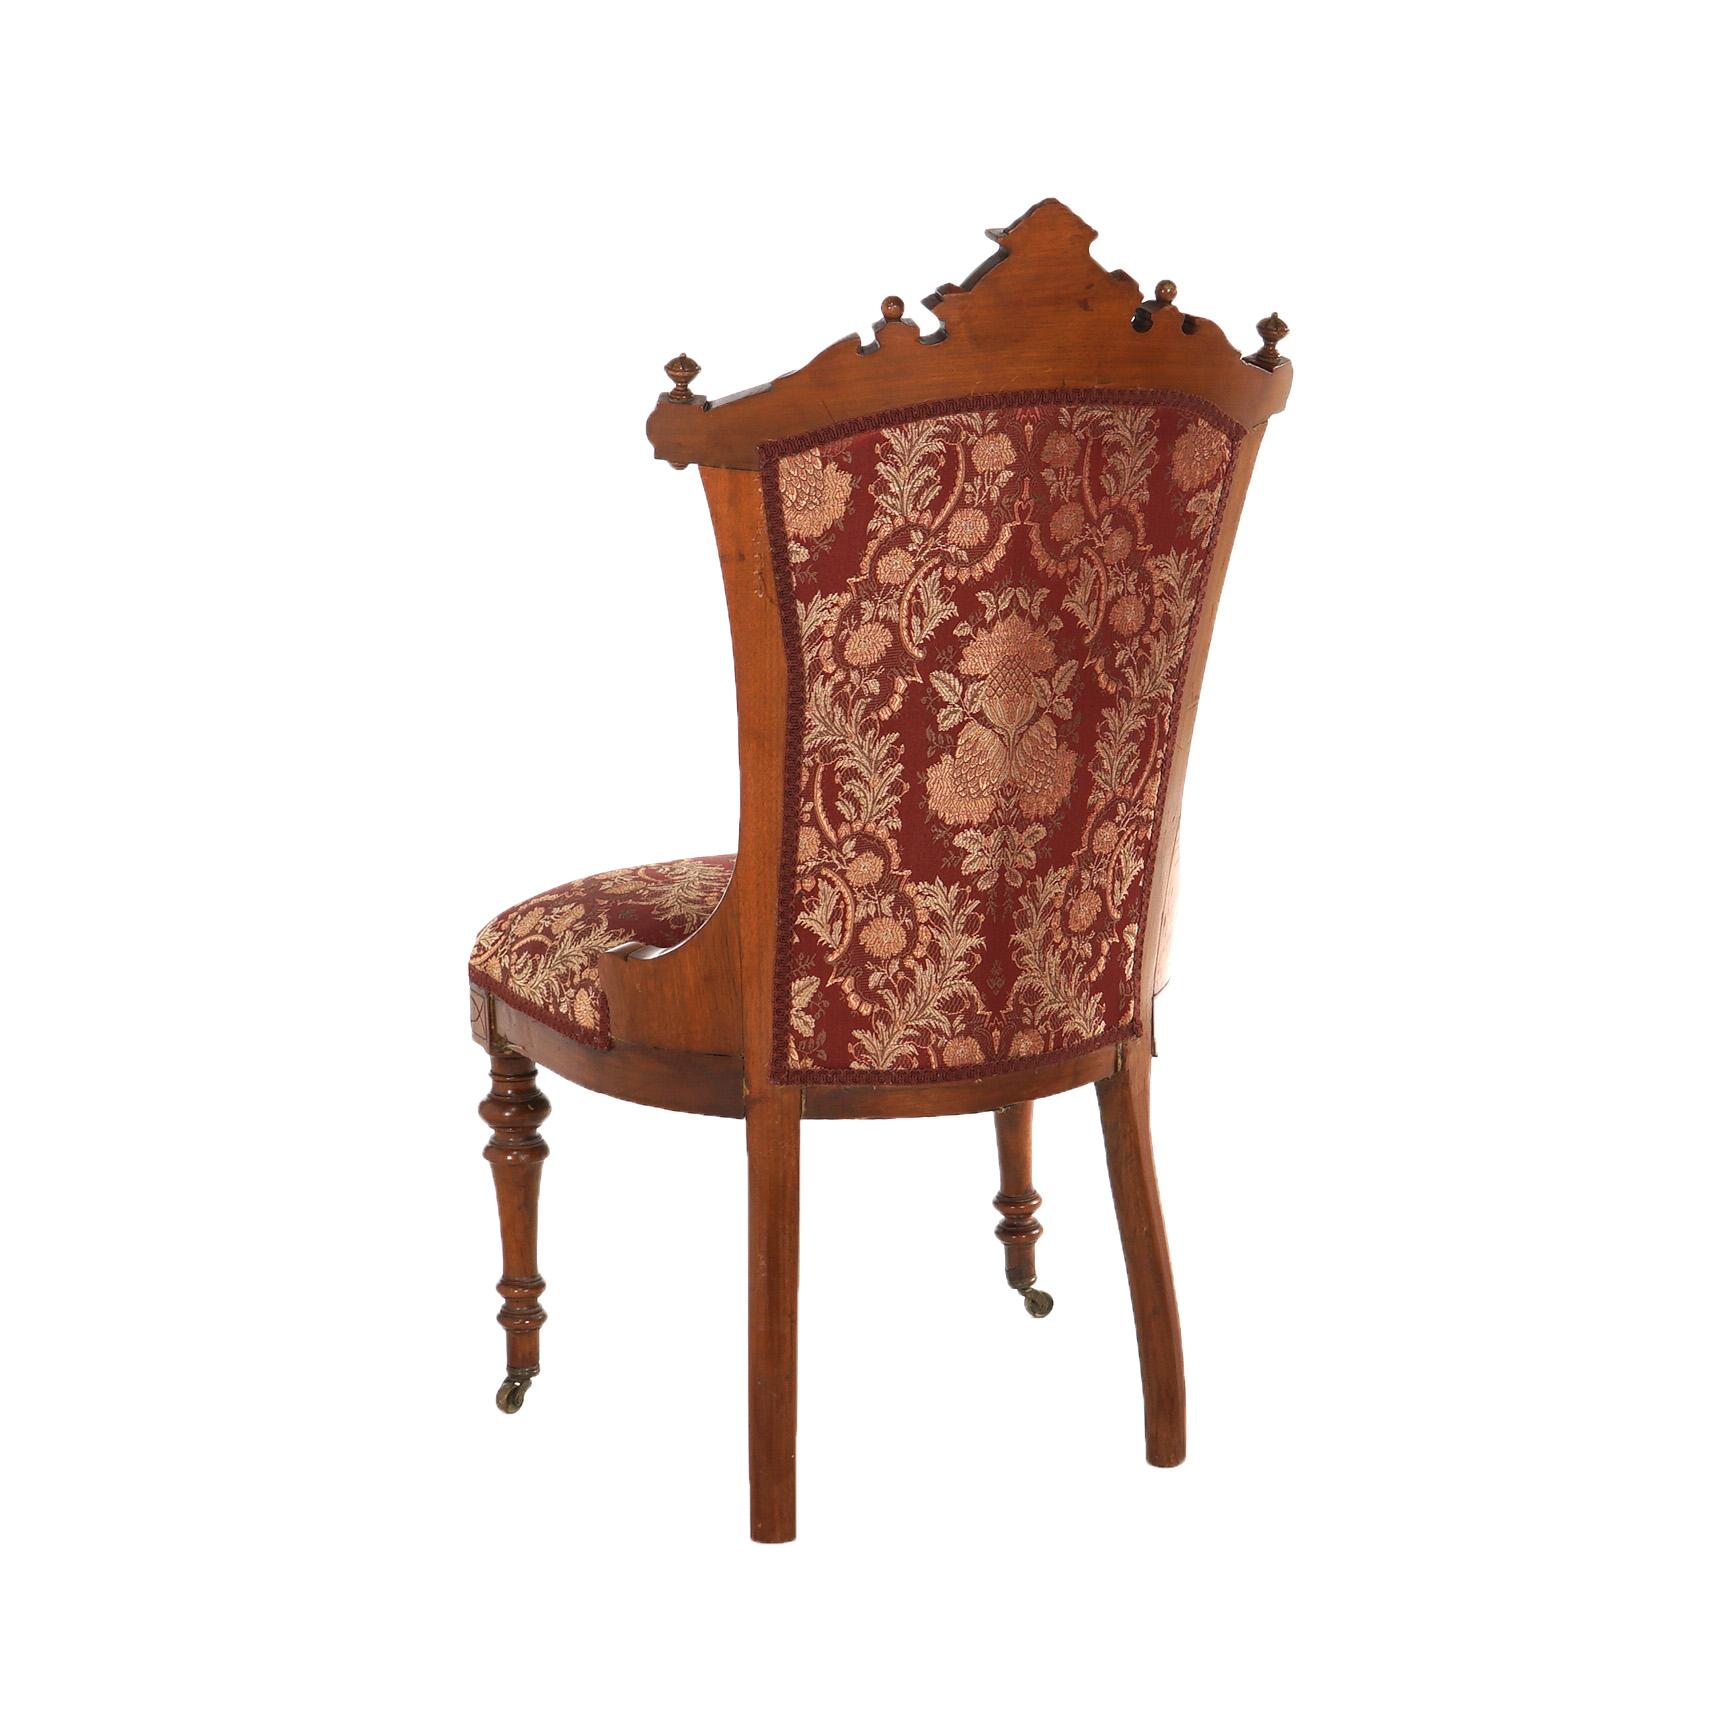 Antique John Jelliff Renaissance Revival Carved Walnut Side Chair C1880 For Sale 5